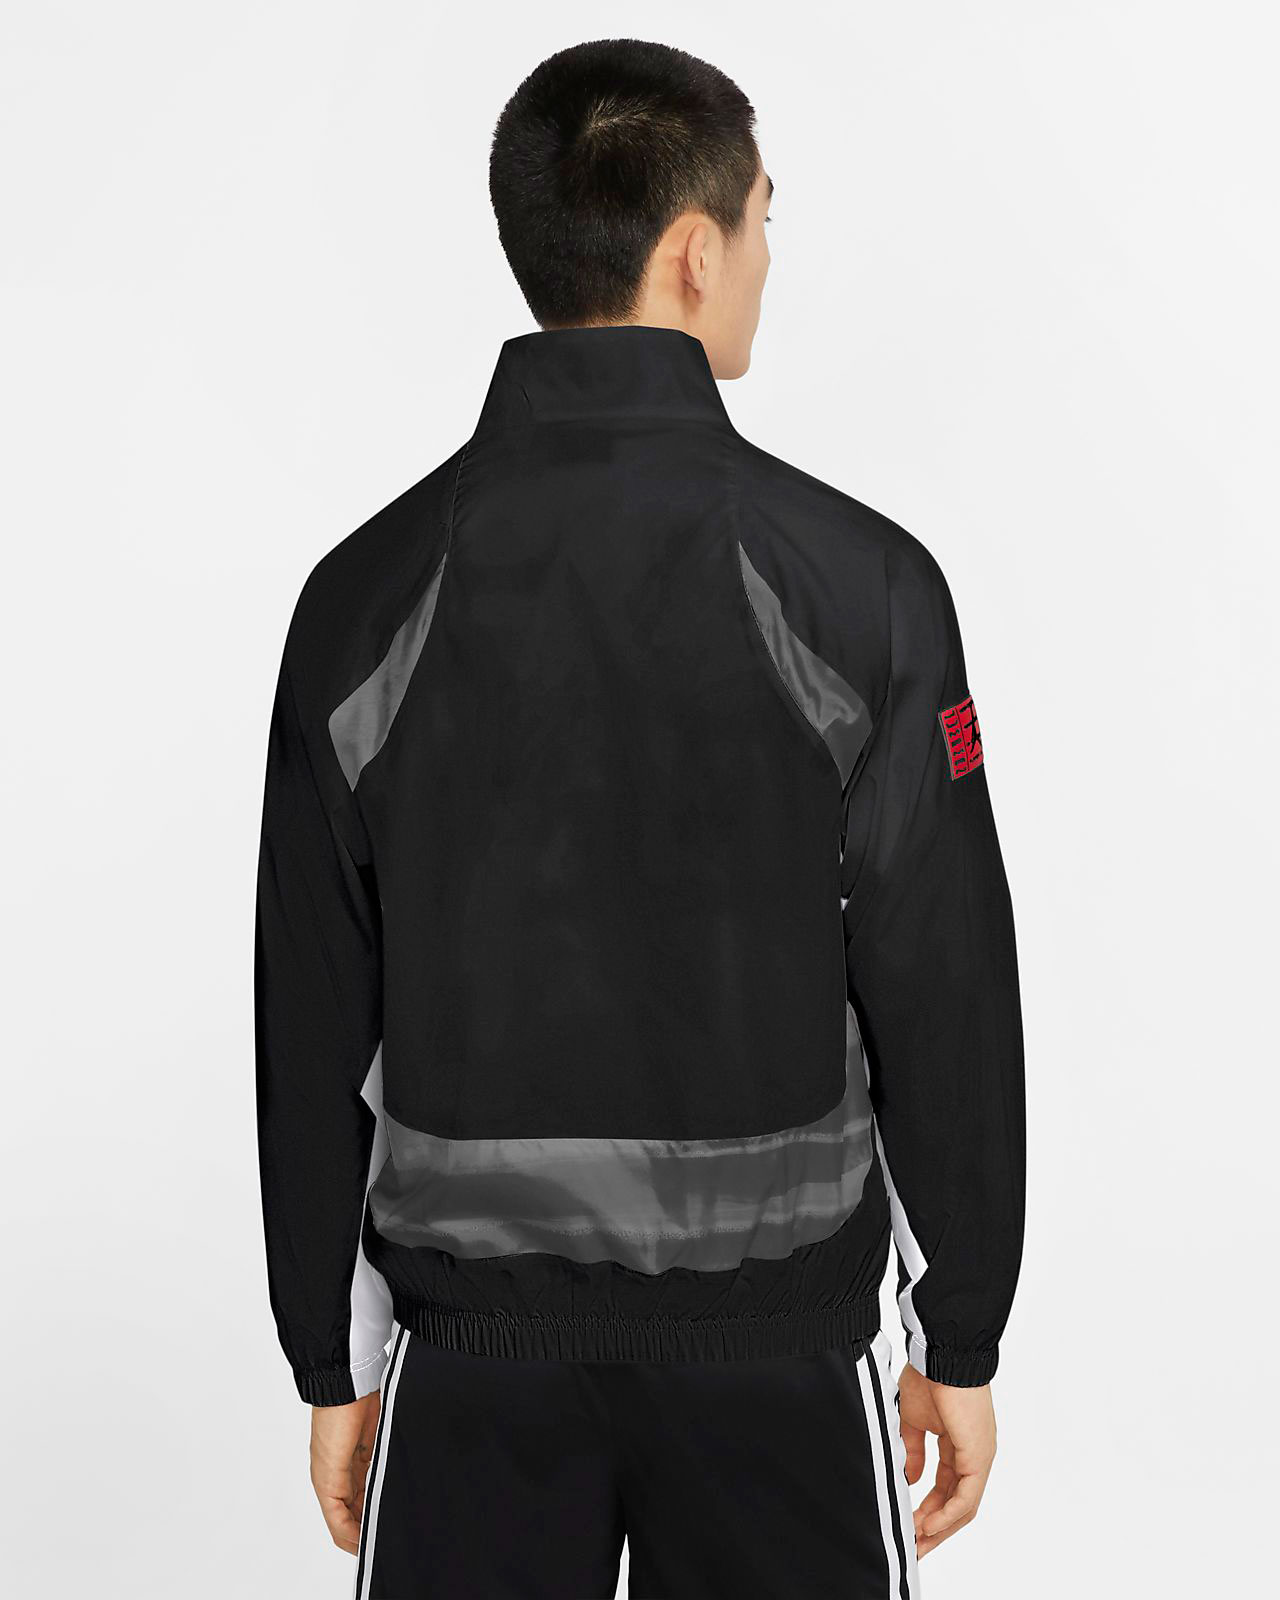 air-jordan-11-concord-bred-jacket-black-2